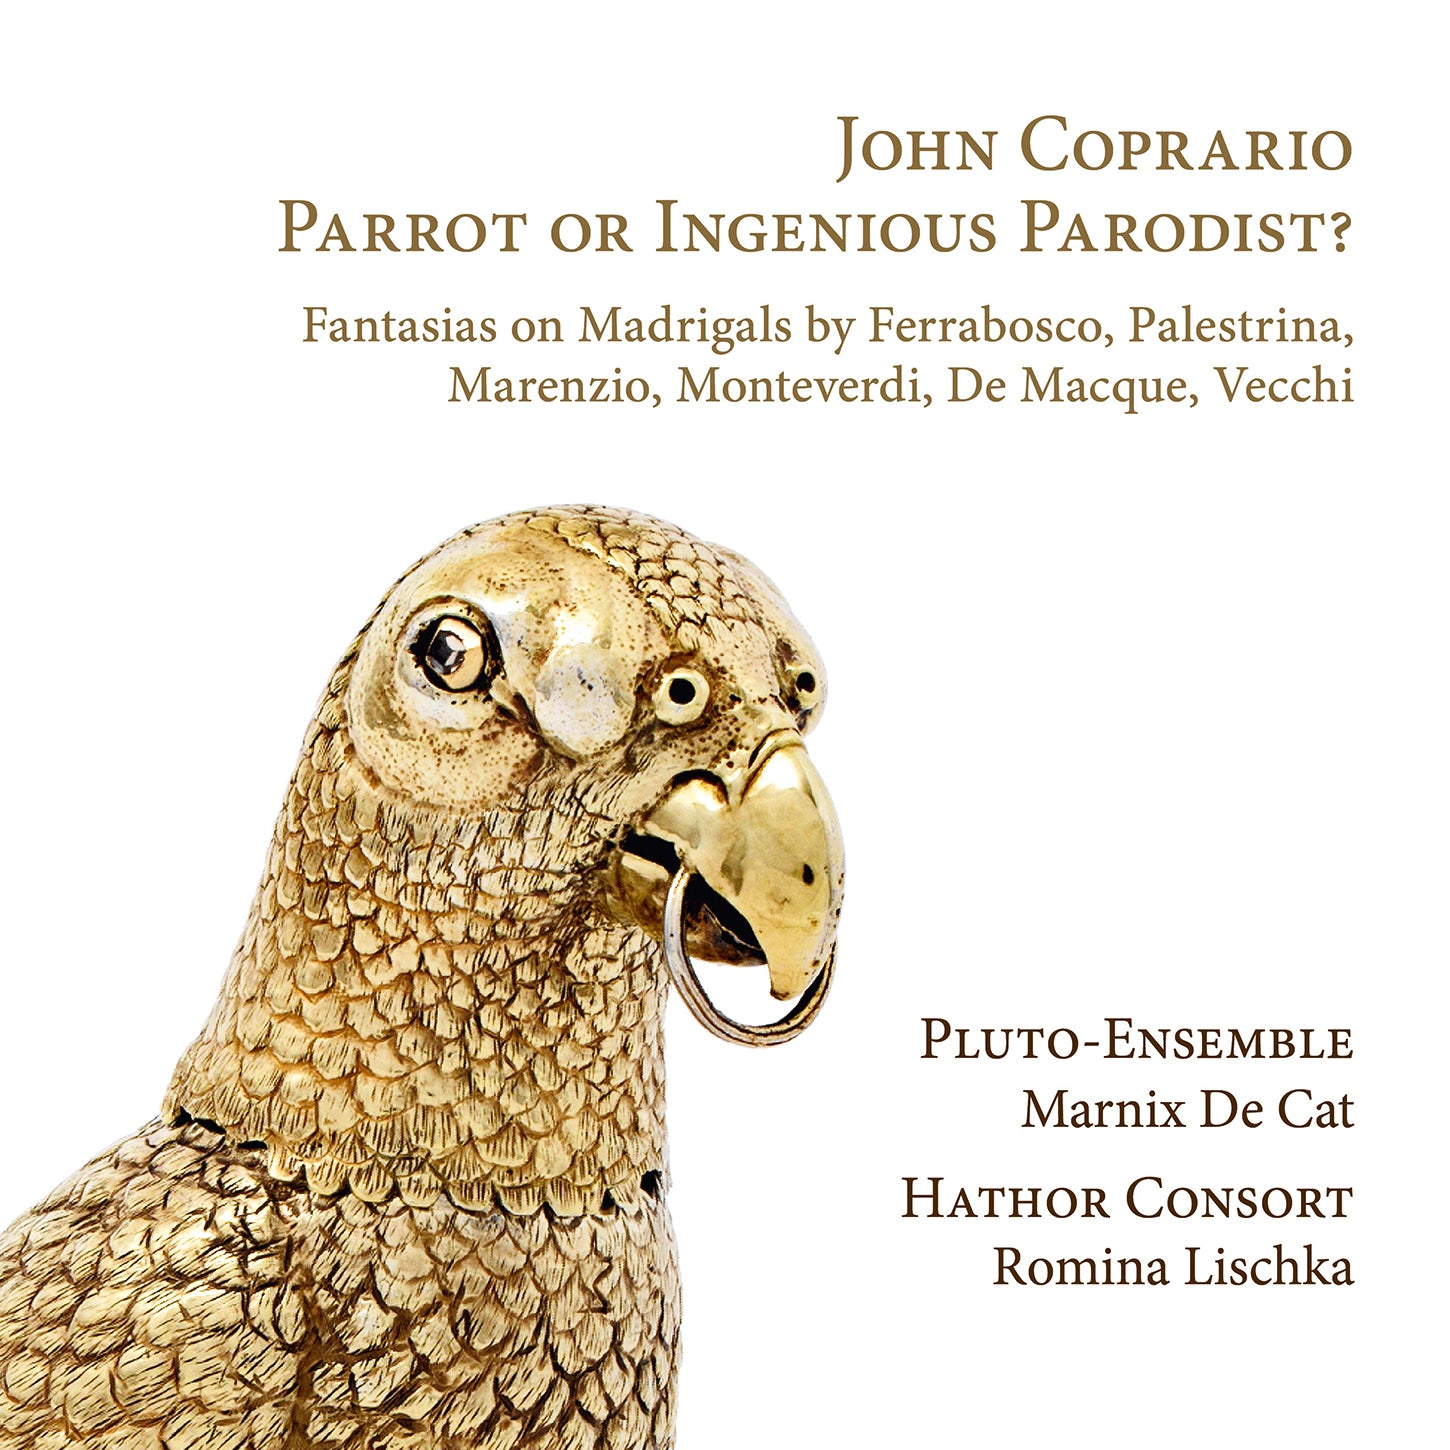 Coprario: Parrot or Ingenious Parodist? / De Cat, Lischka, Pluto-Ensemble, Hathor Consort